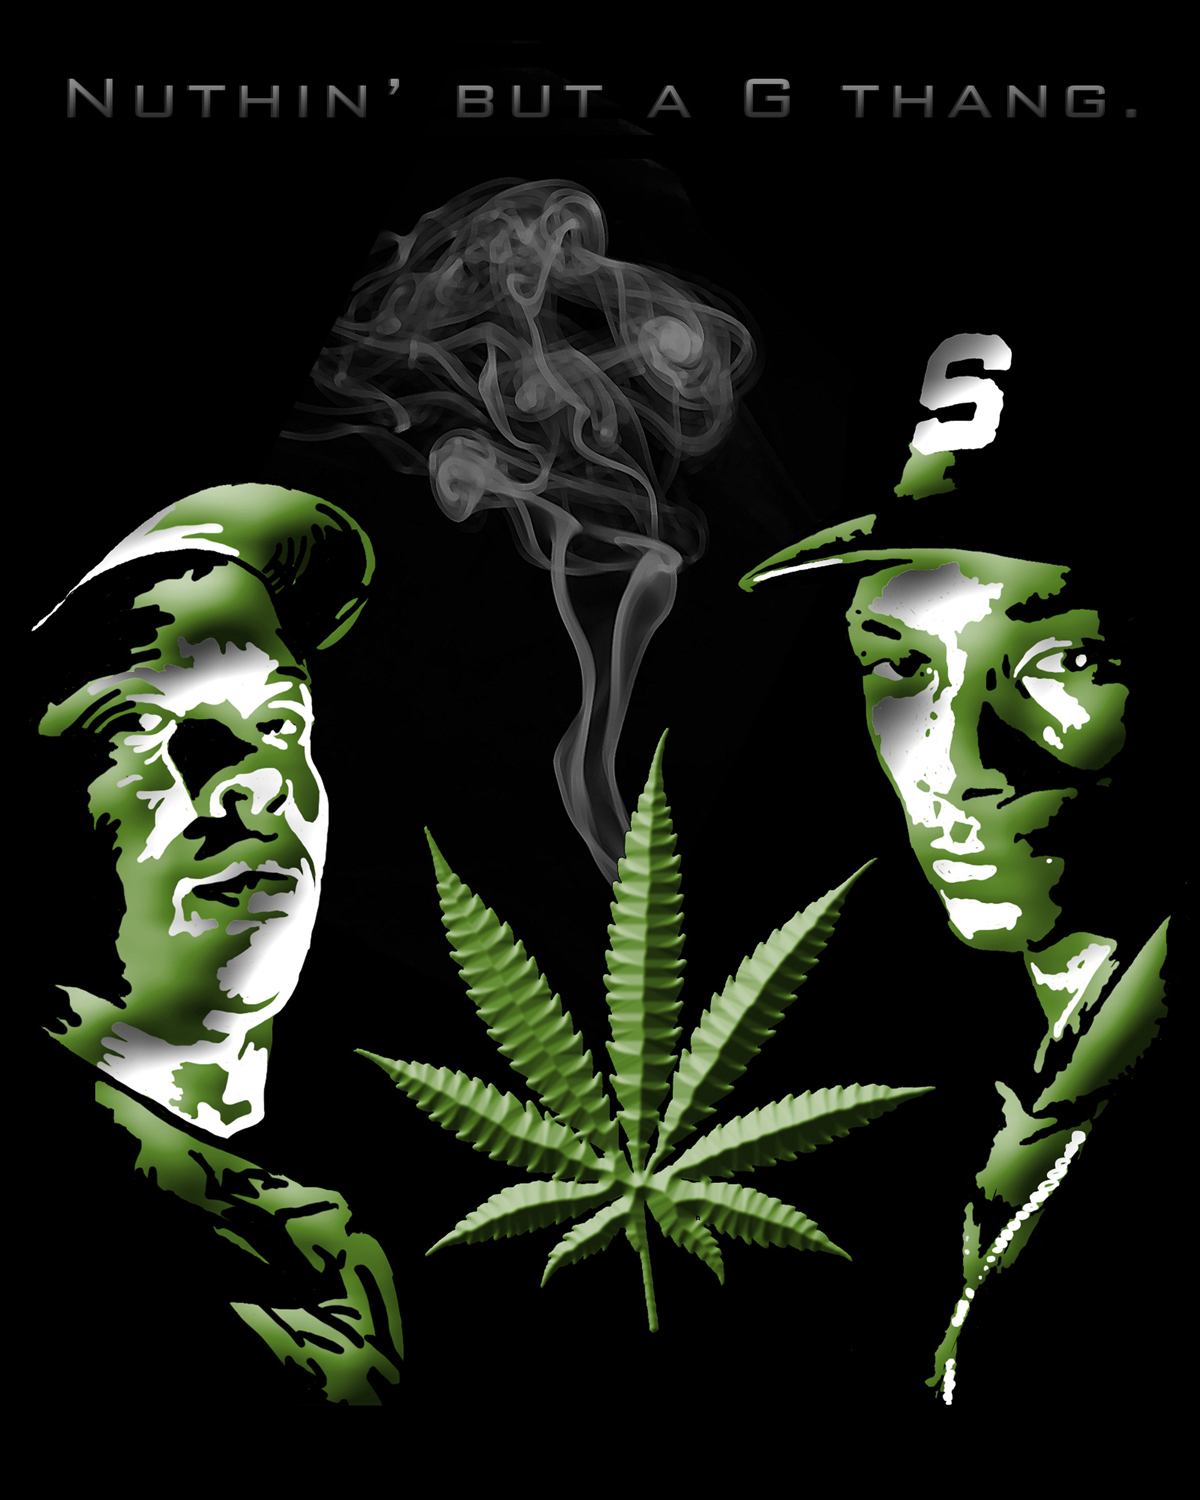 Snoop and Dre - G Thang - Snoop Dogg Fan Art (23640028) - Fanpop